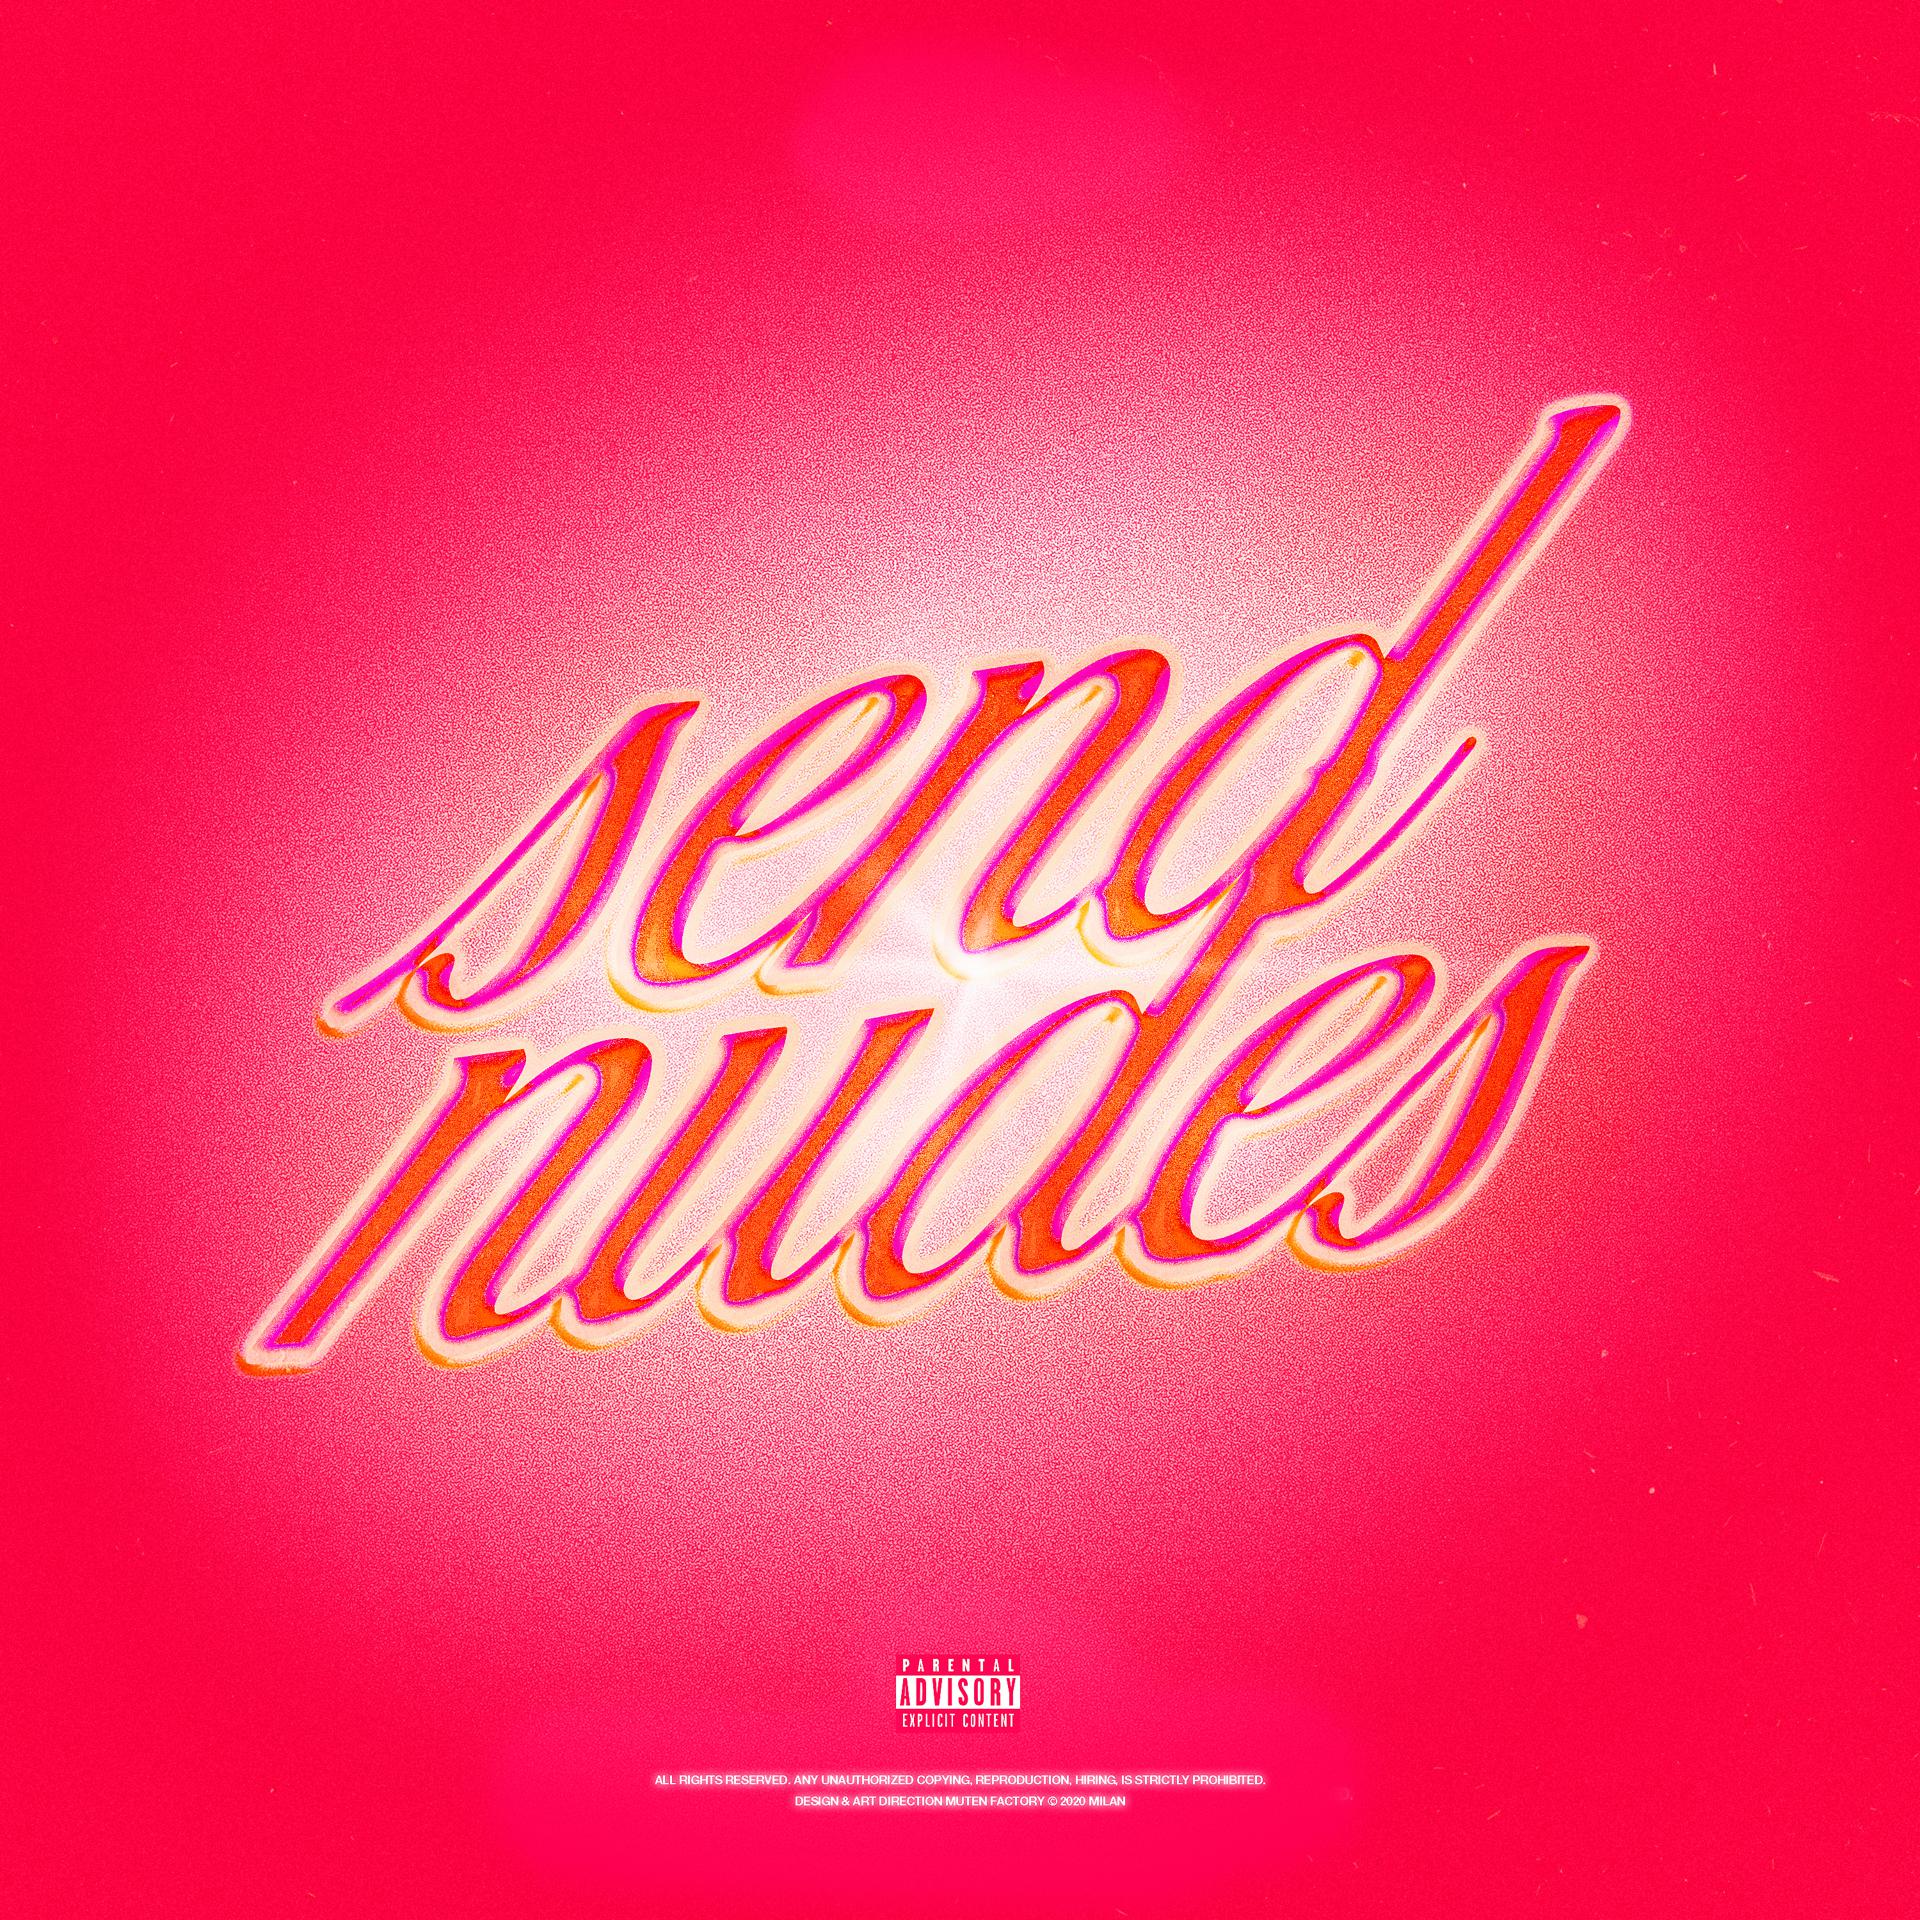 Постер альбома Send Nudes